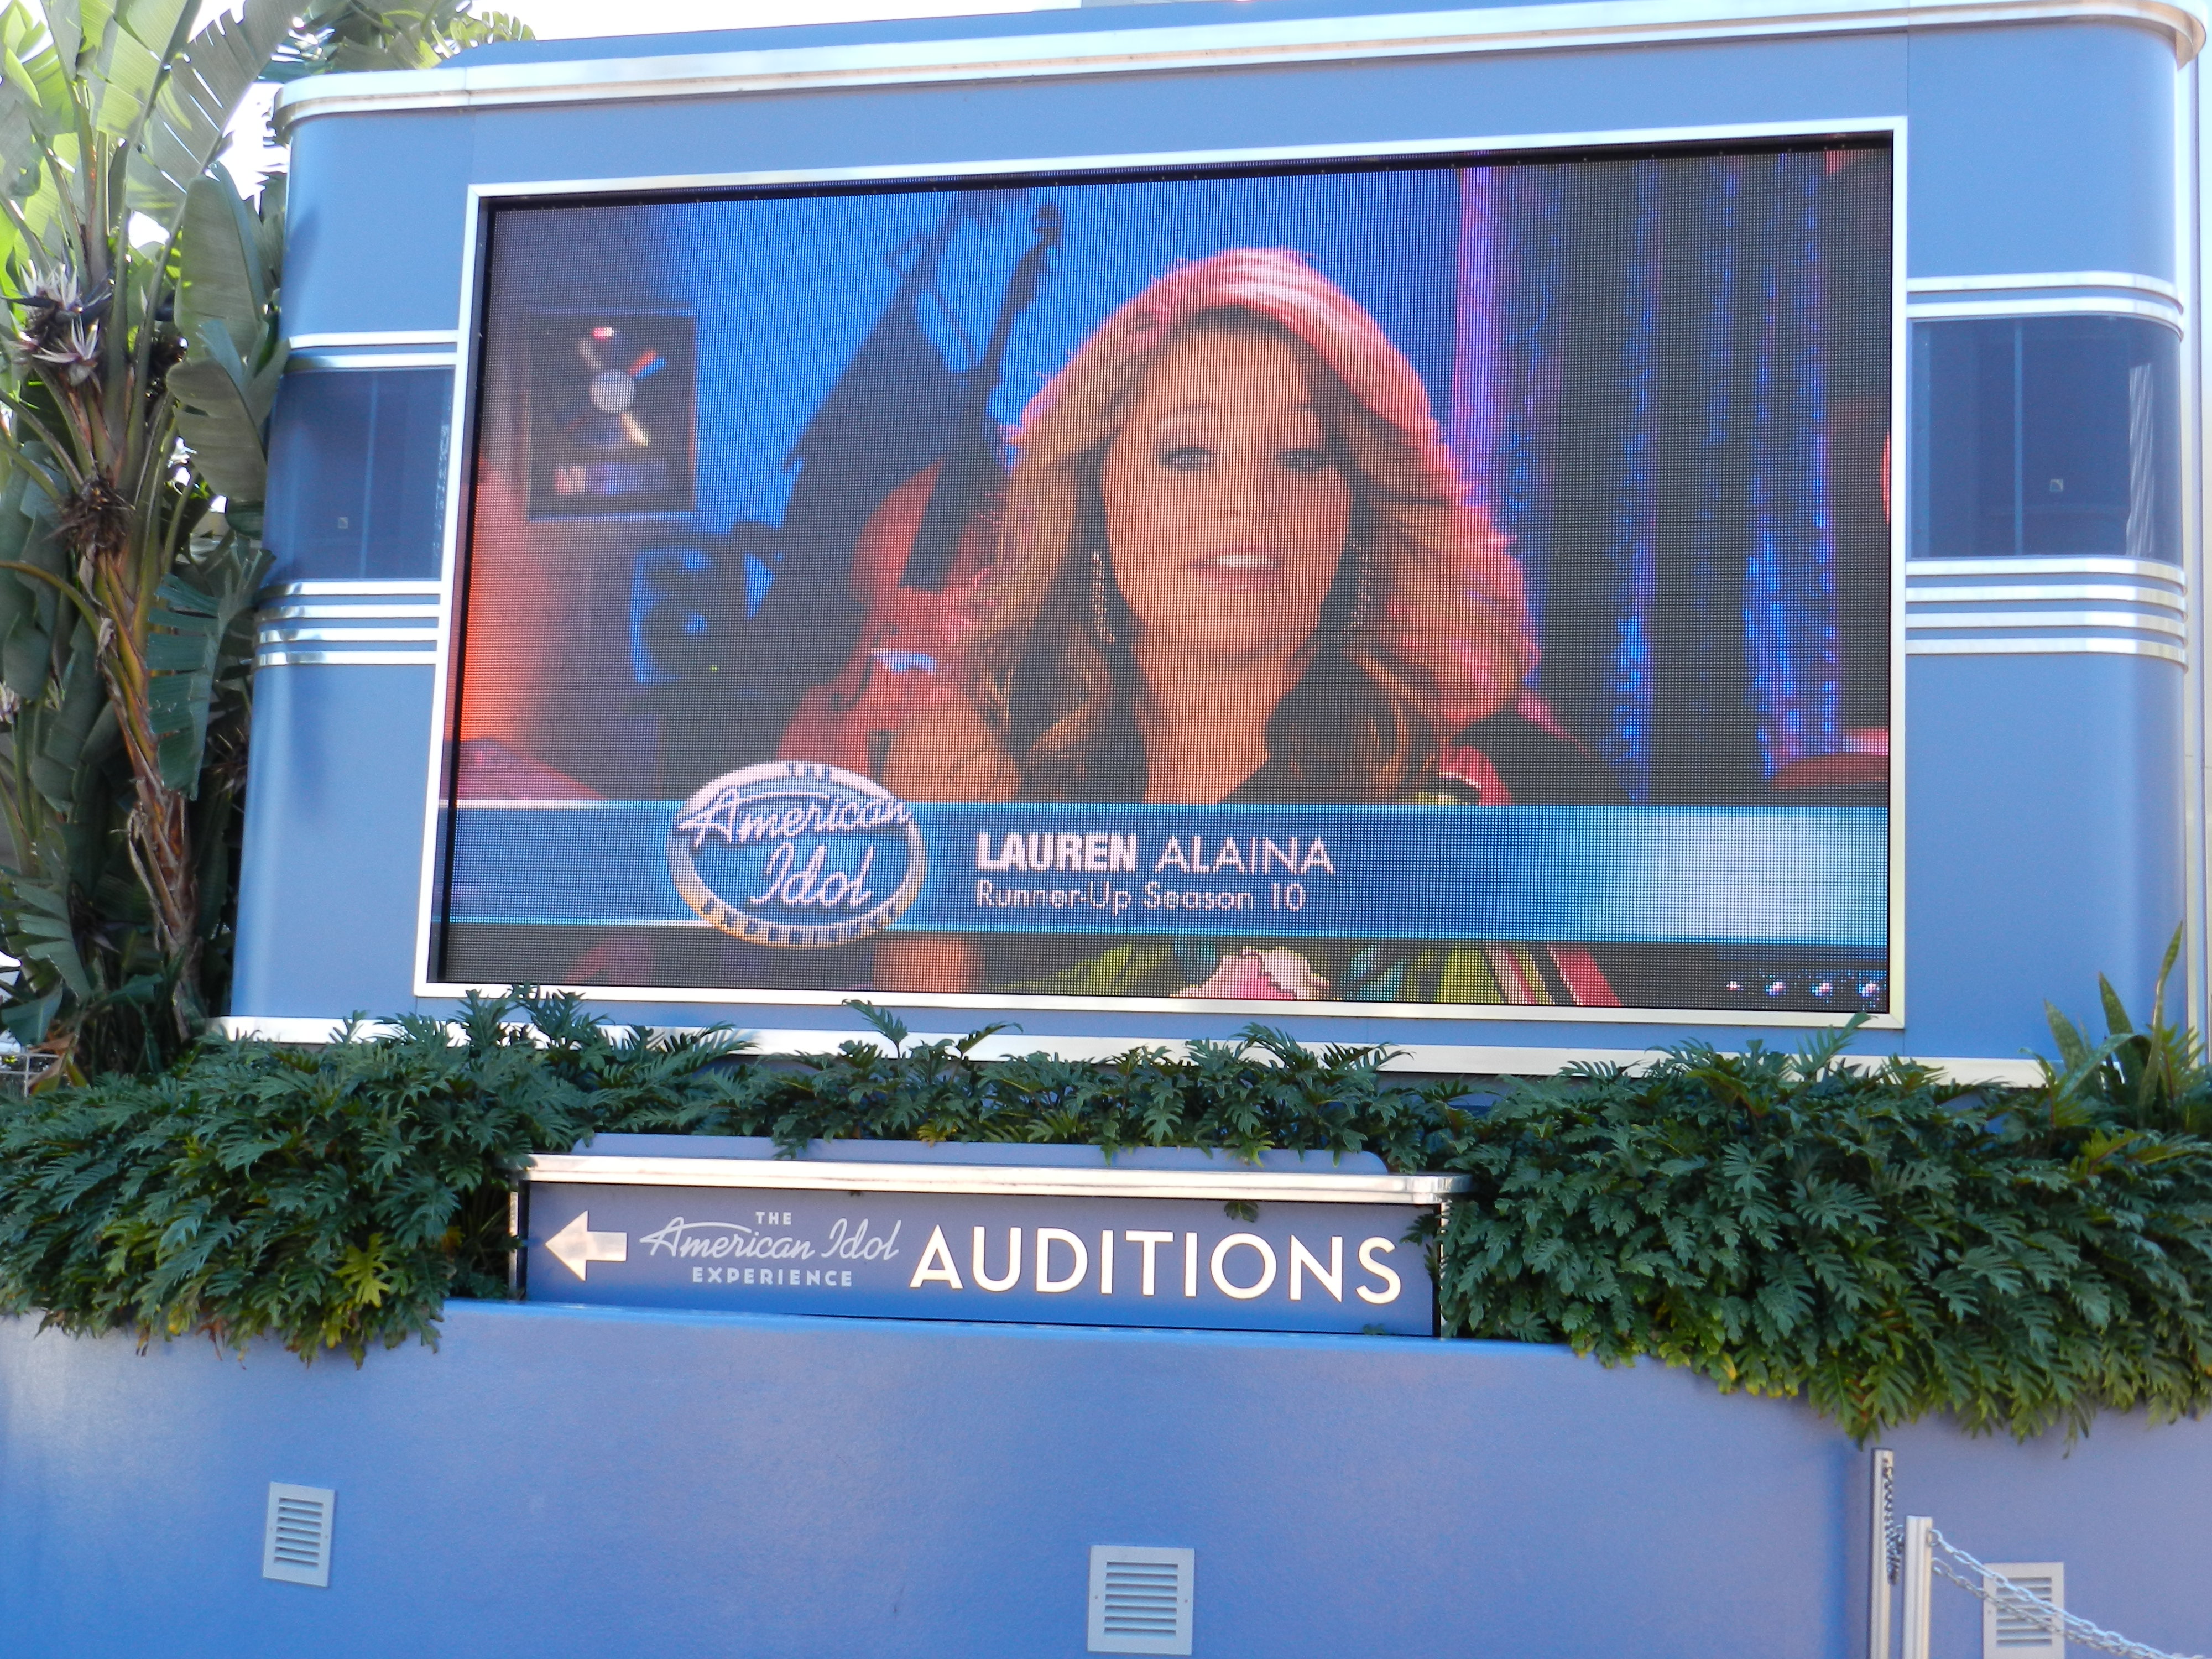 American Idol Experience Disney with Season 10 runner up Lauren Alaina